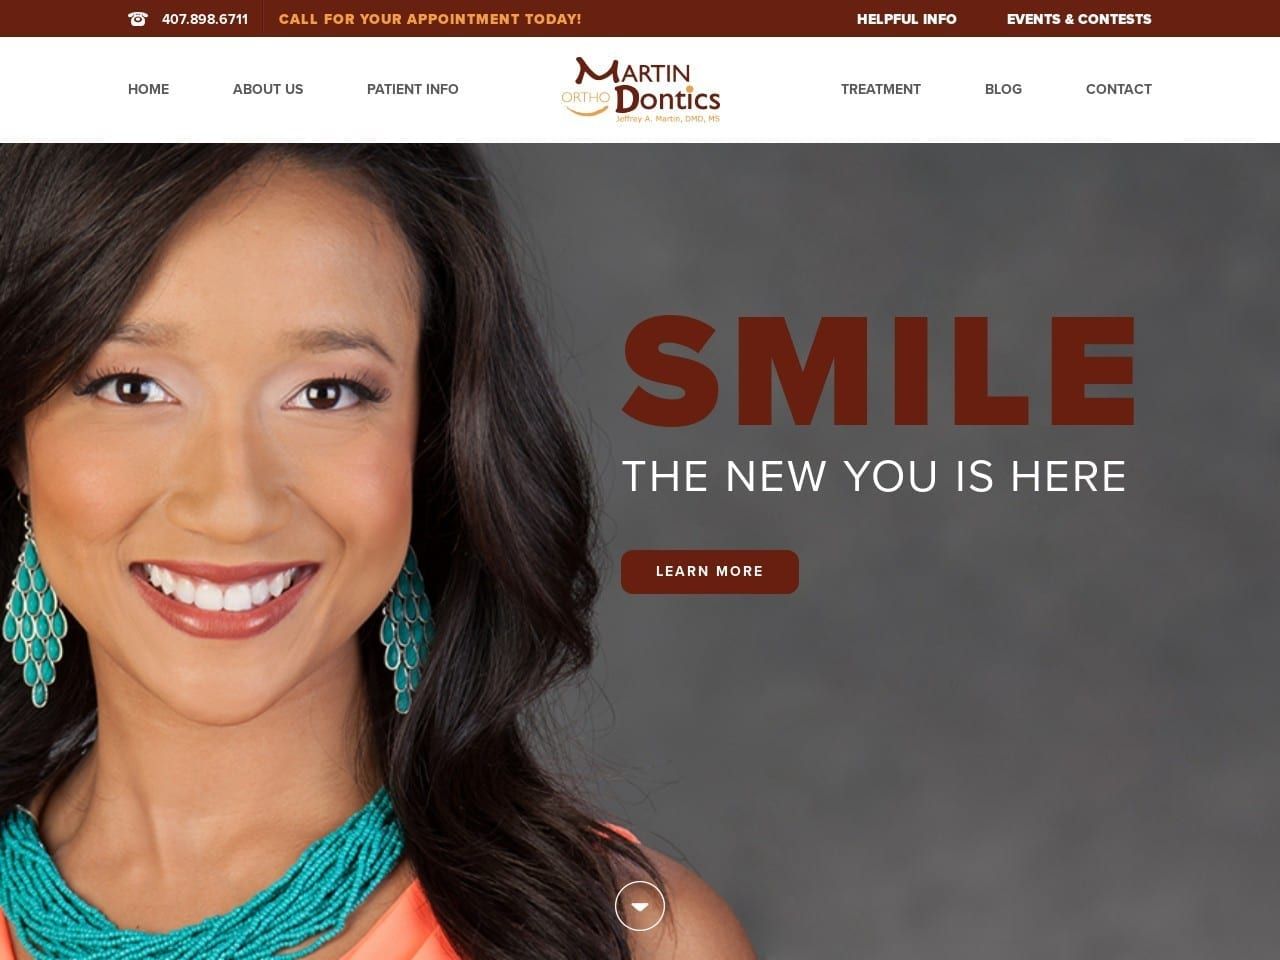 Martin Orthodontics Website Screenshot from martindontics.com